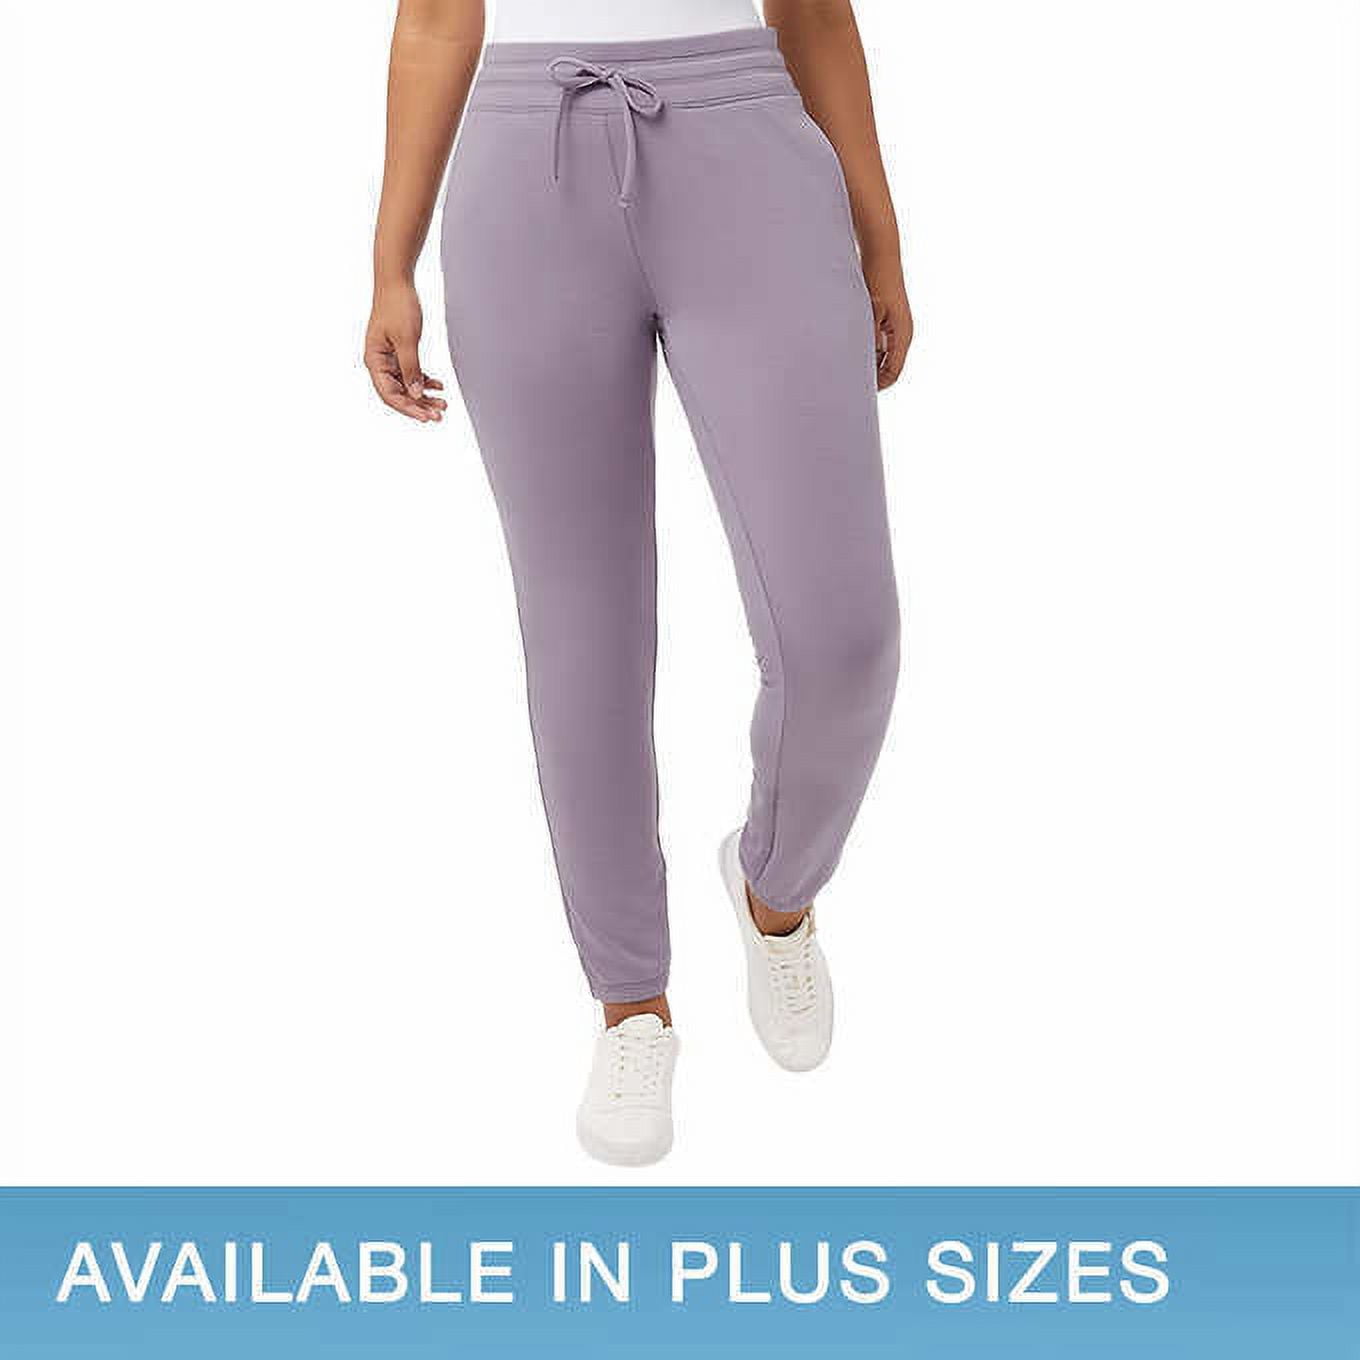 32 Degrees Cool Womens Purple Sweatpants Size XS - beyond exchange